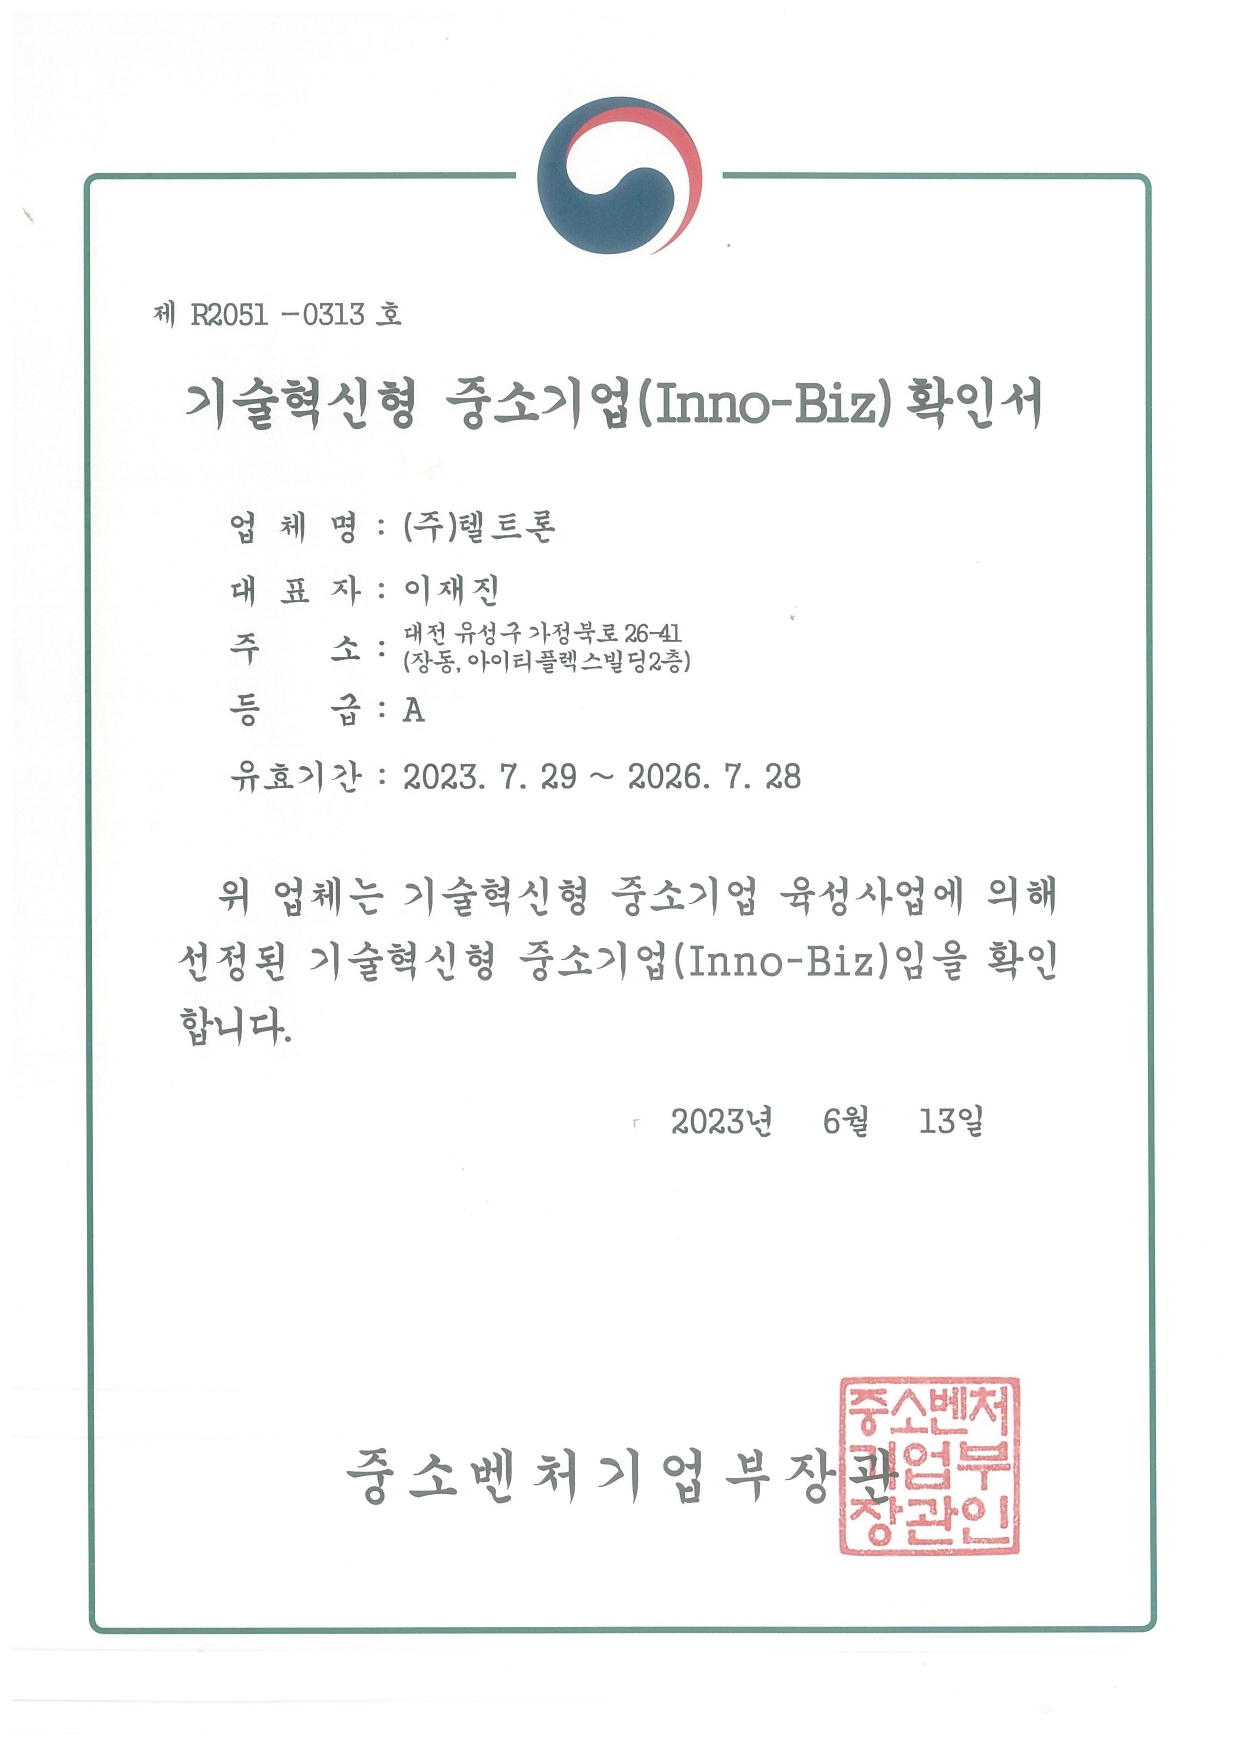 Inno-Biz Certificate [첨부 이미지1]